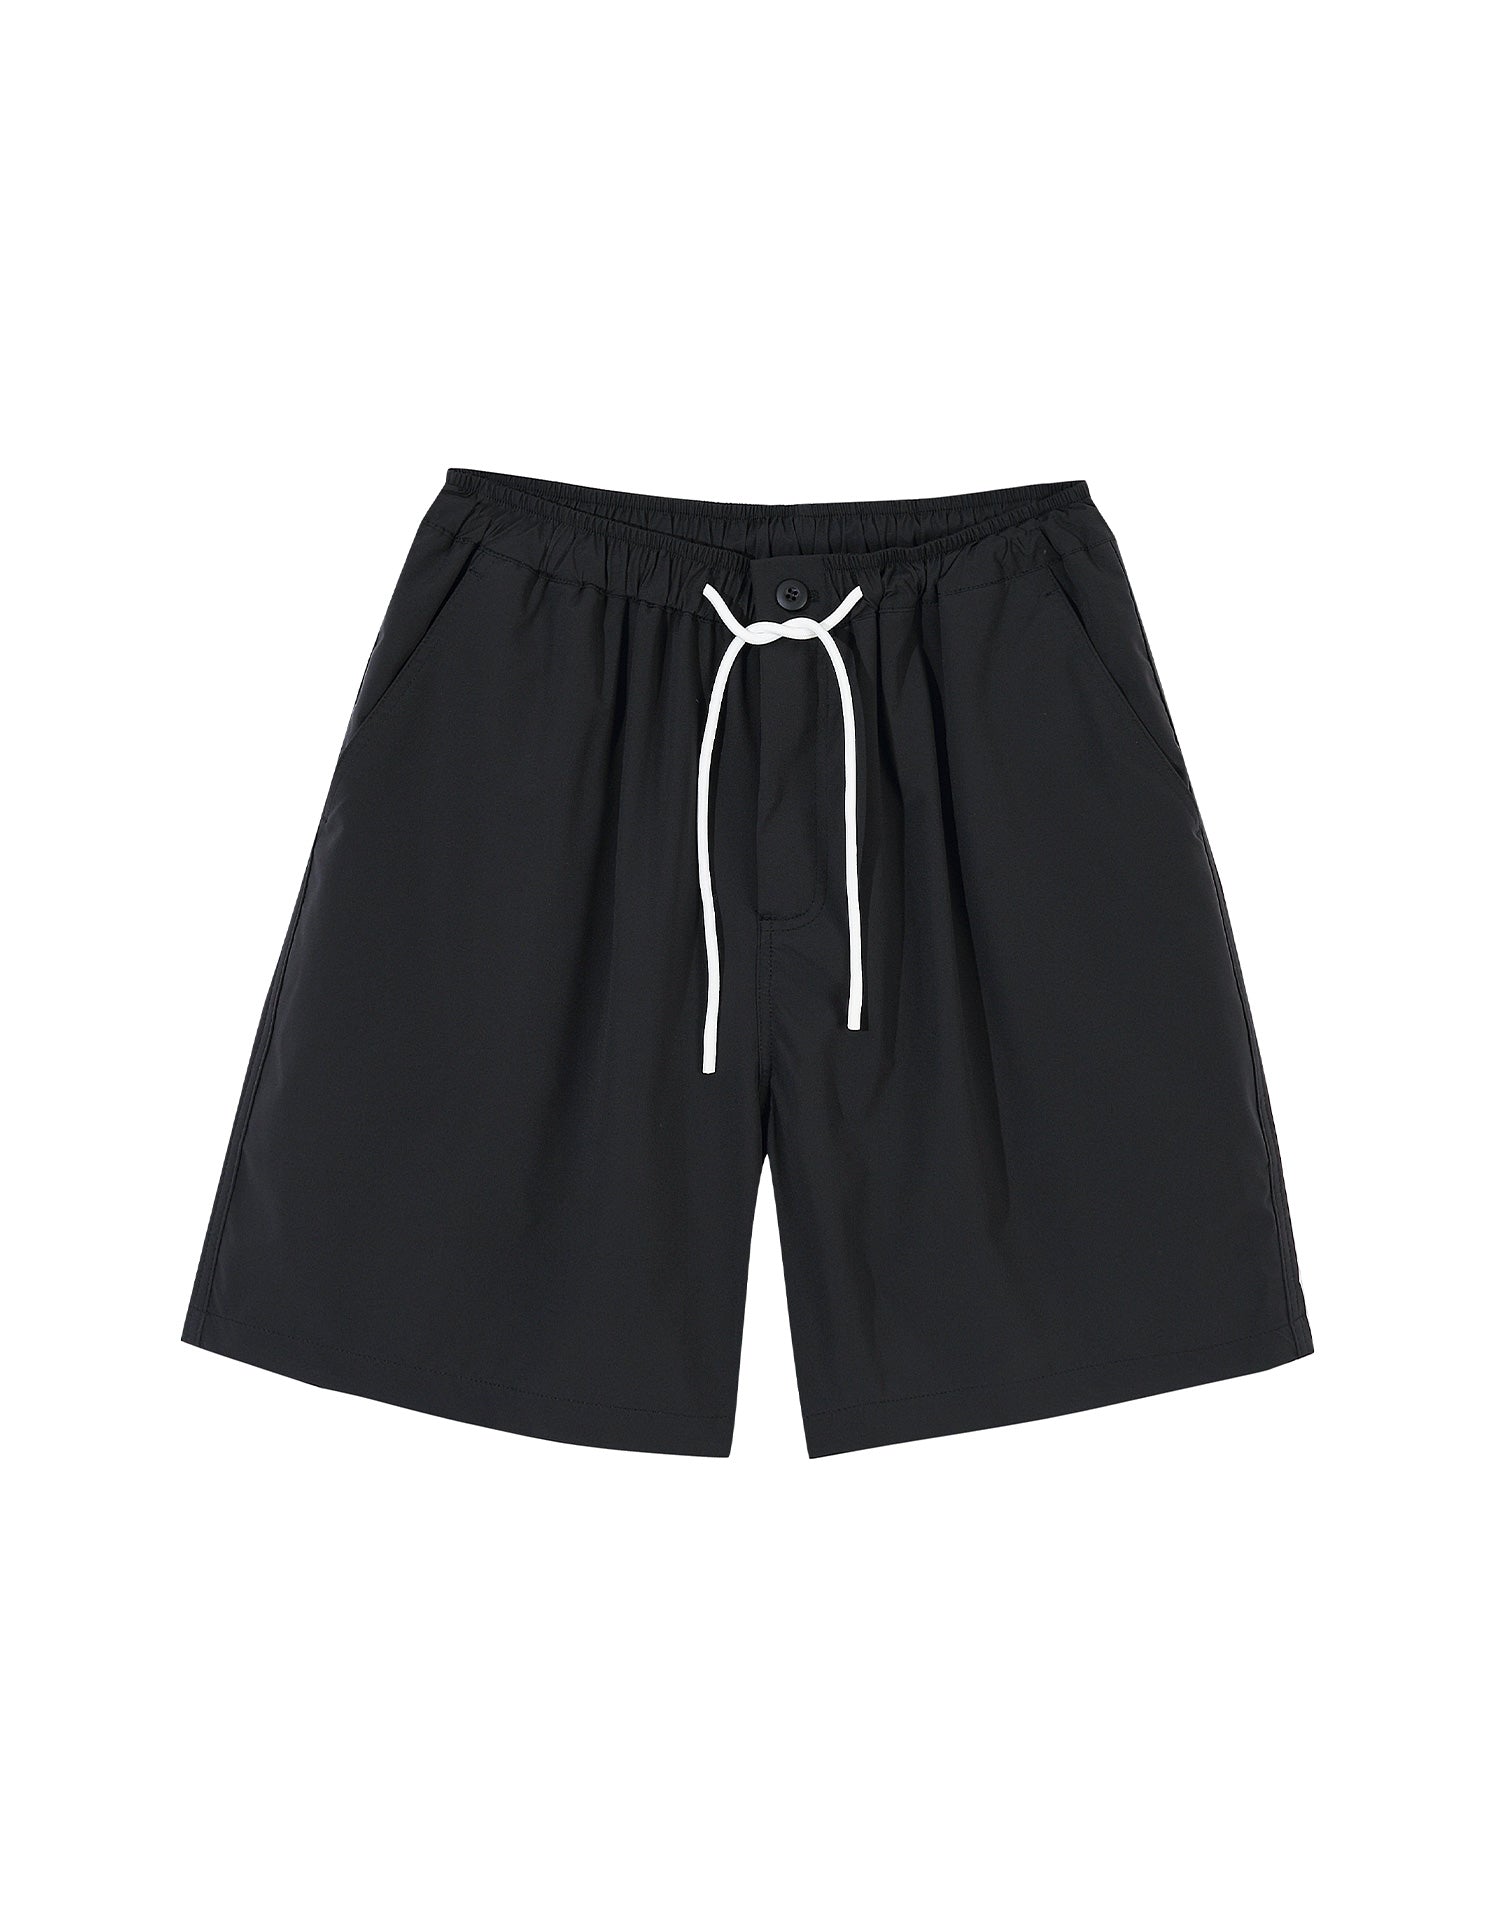 TopBasics Outdoor Plain Shorts